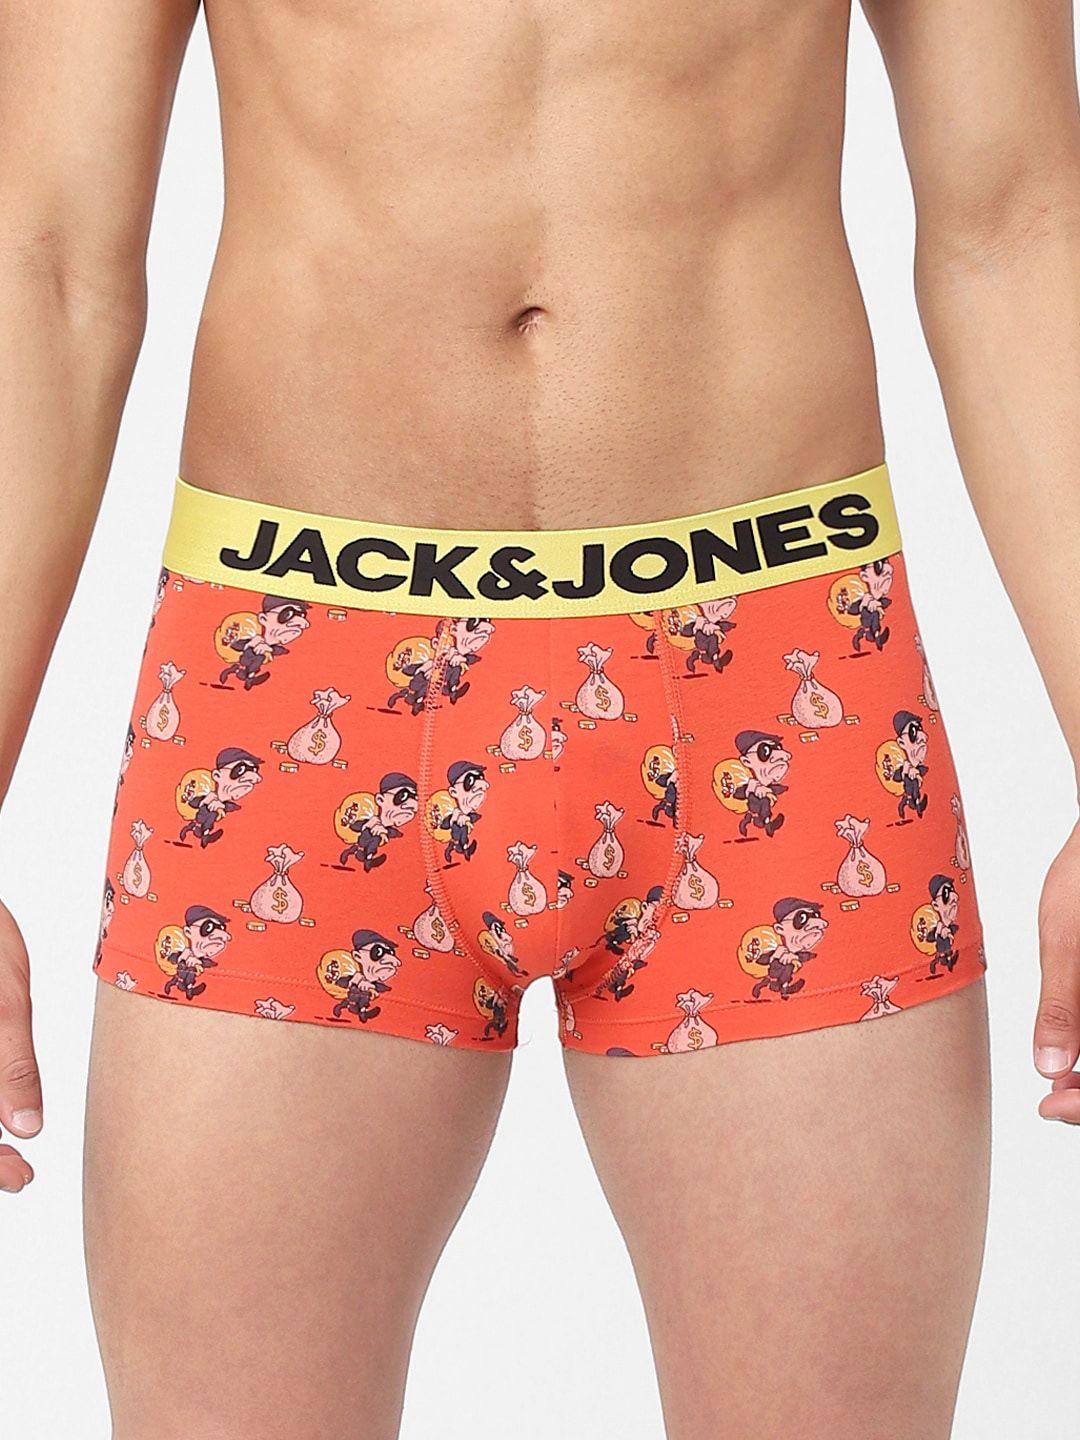 jack & jones men orange & pink printed cotton trunks 116799901